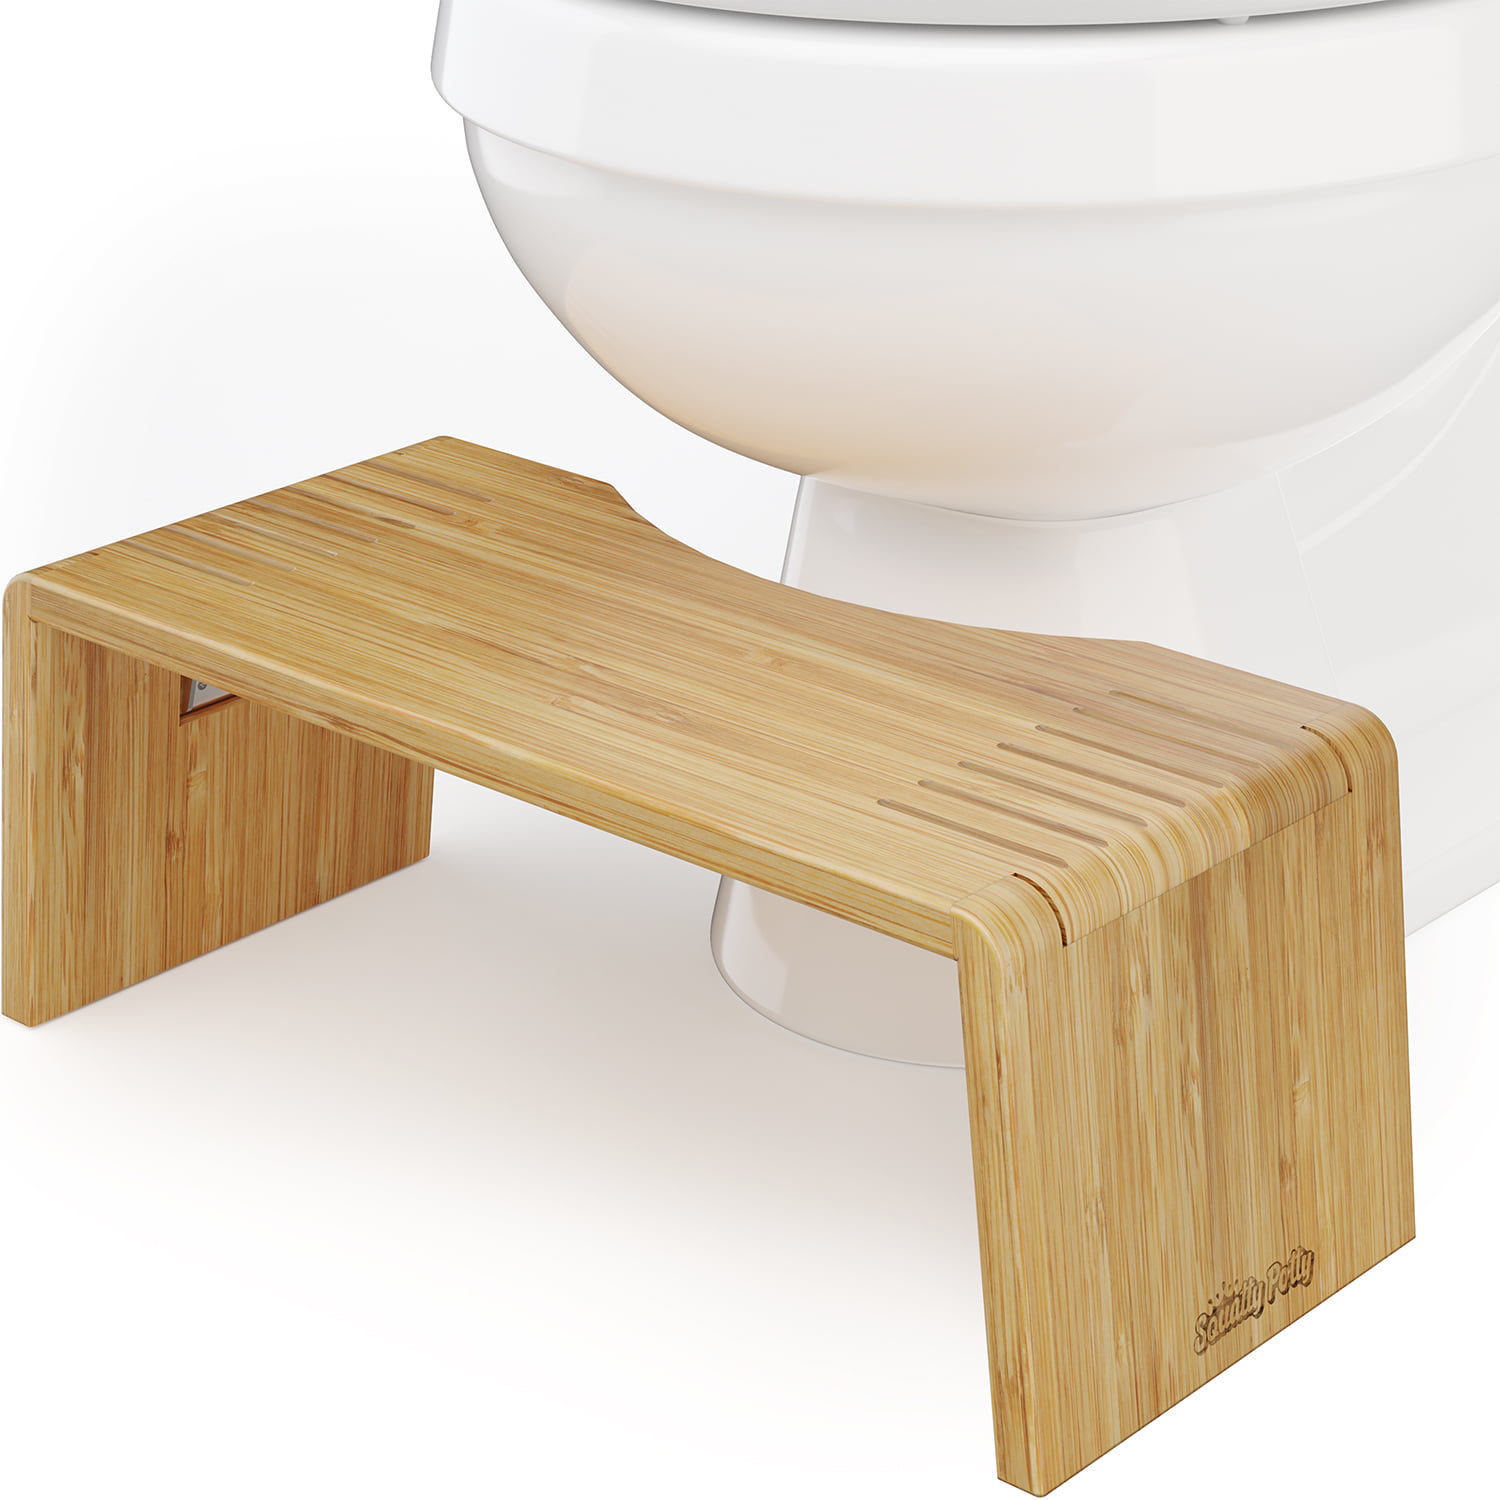 Squatting Toilet Stool Fodable Bamboo Wood Bathroom Poop Stool 6" 7" 8" 9" inch 